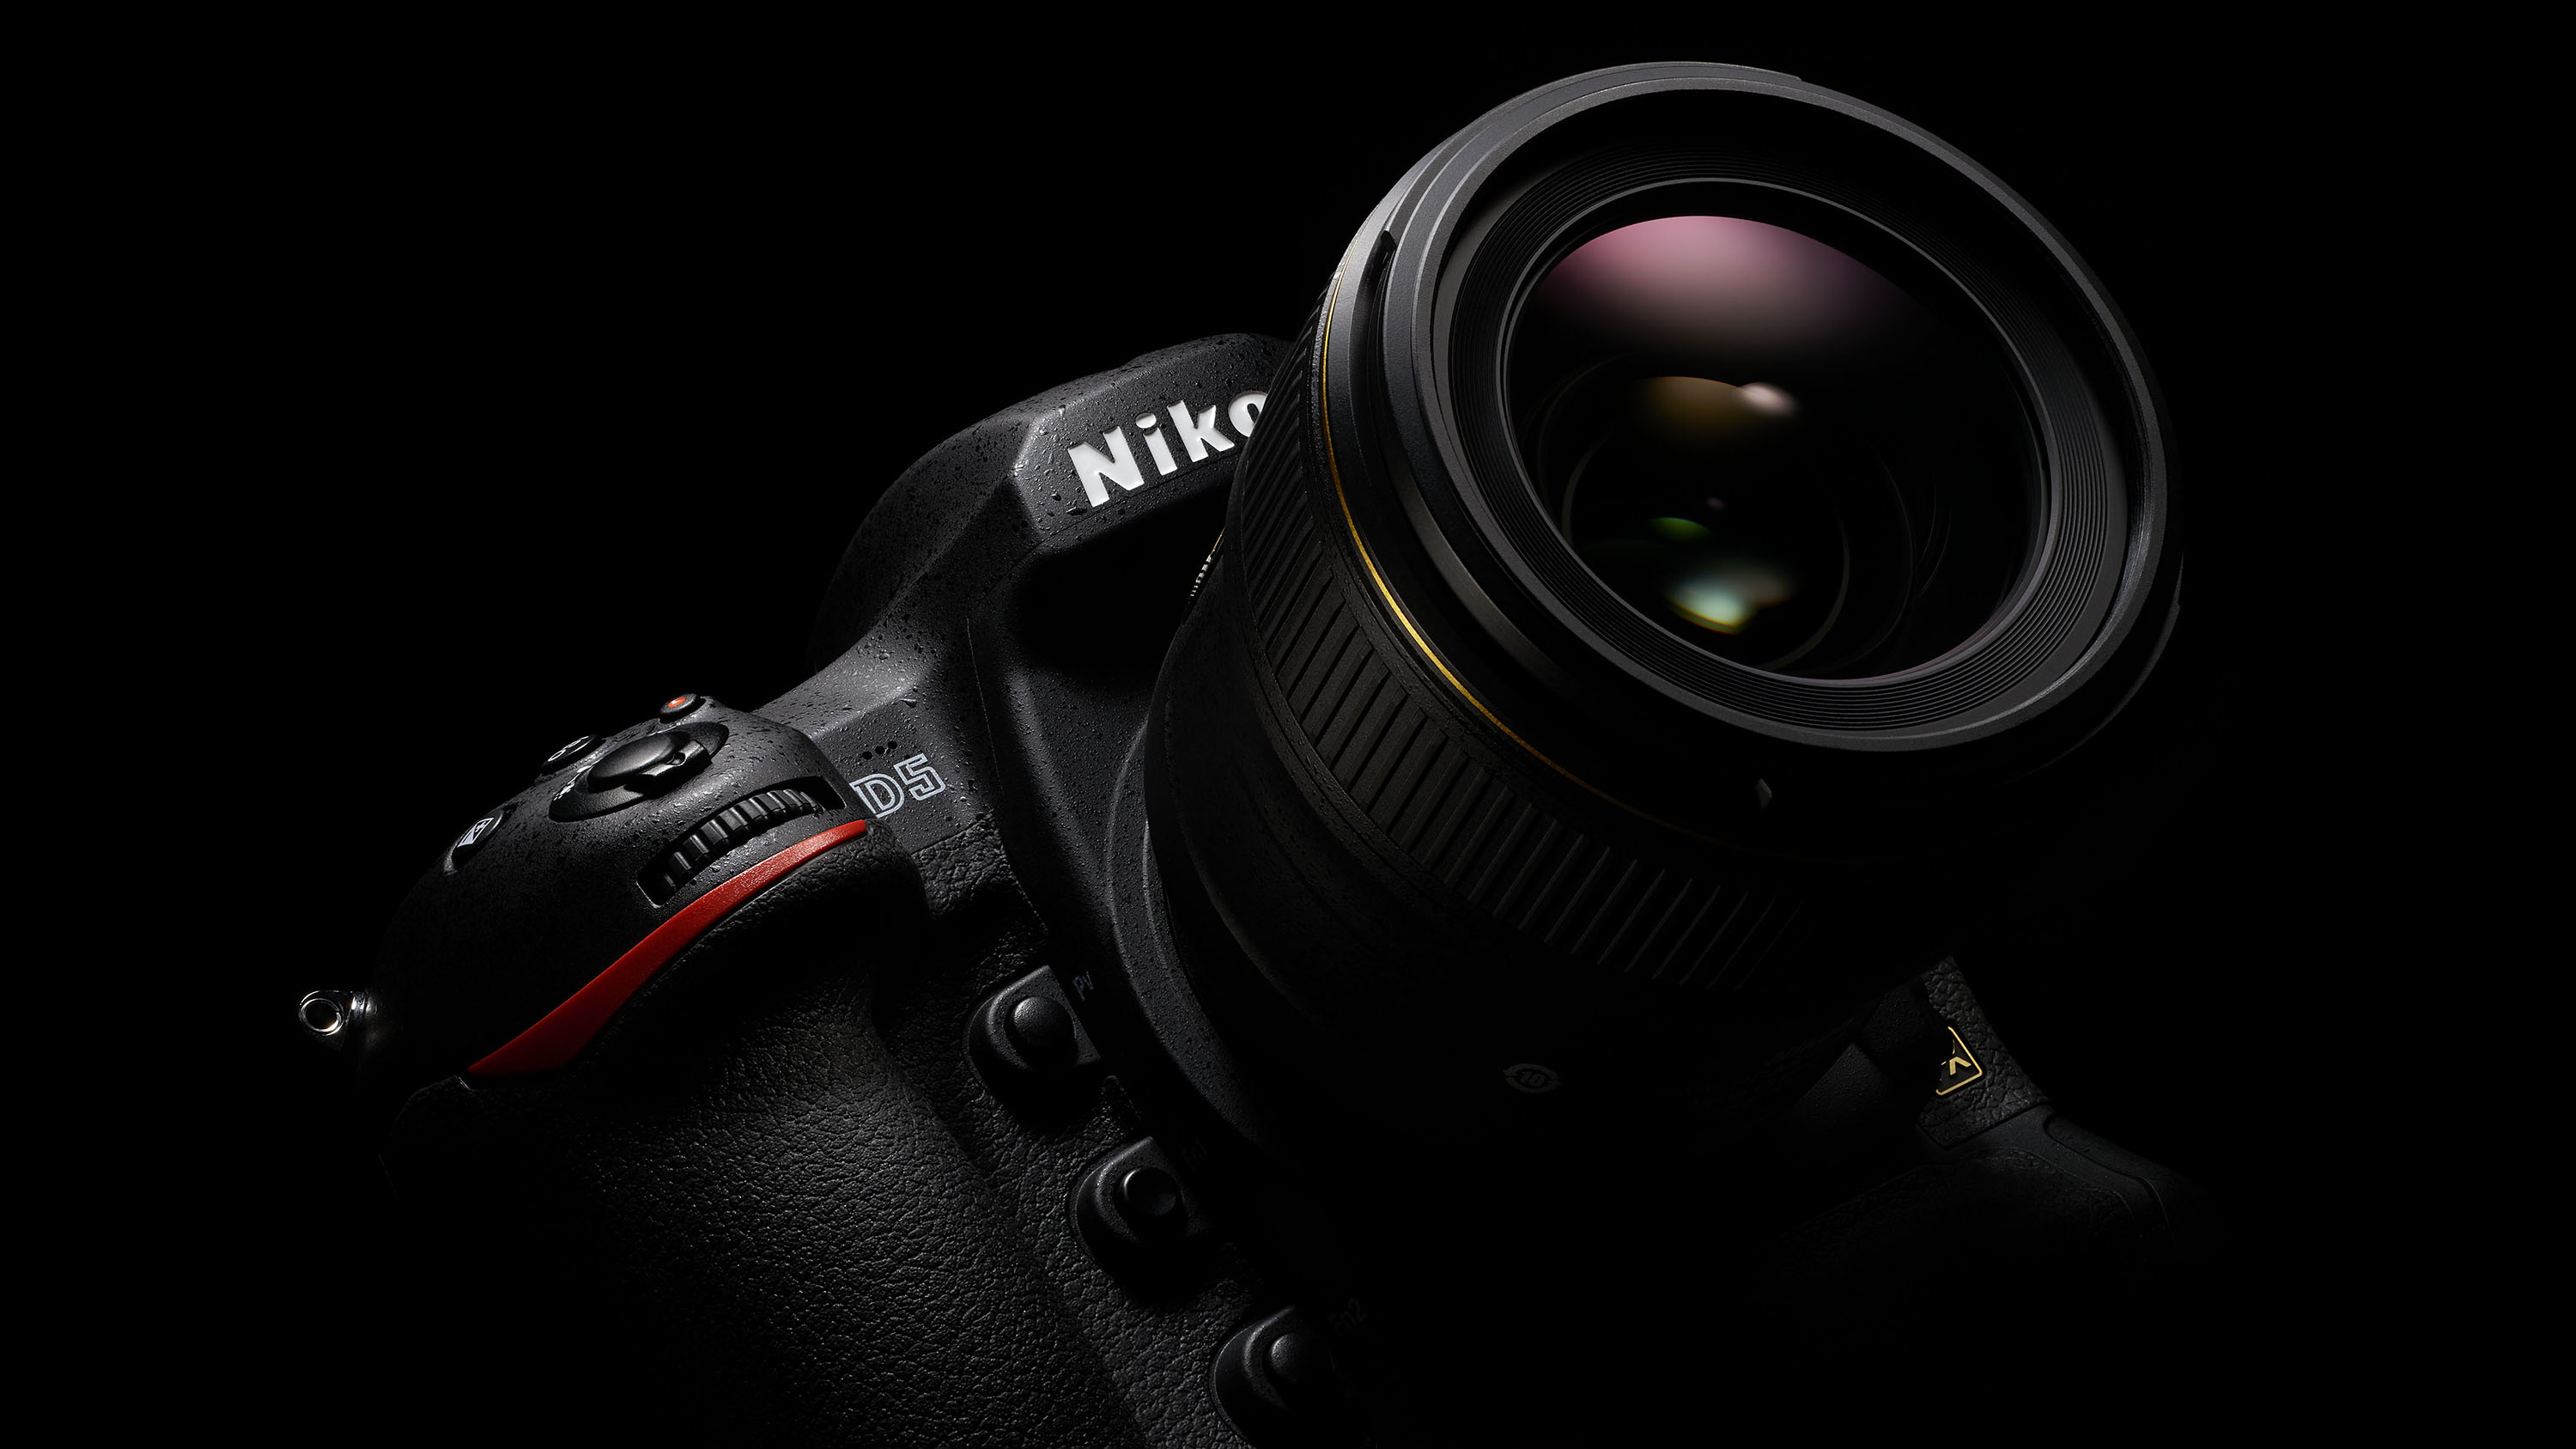 Best camera: Nikon D5